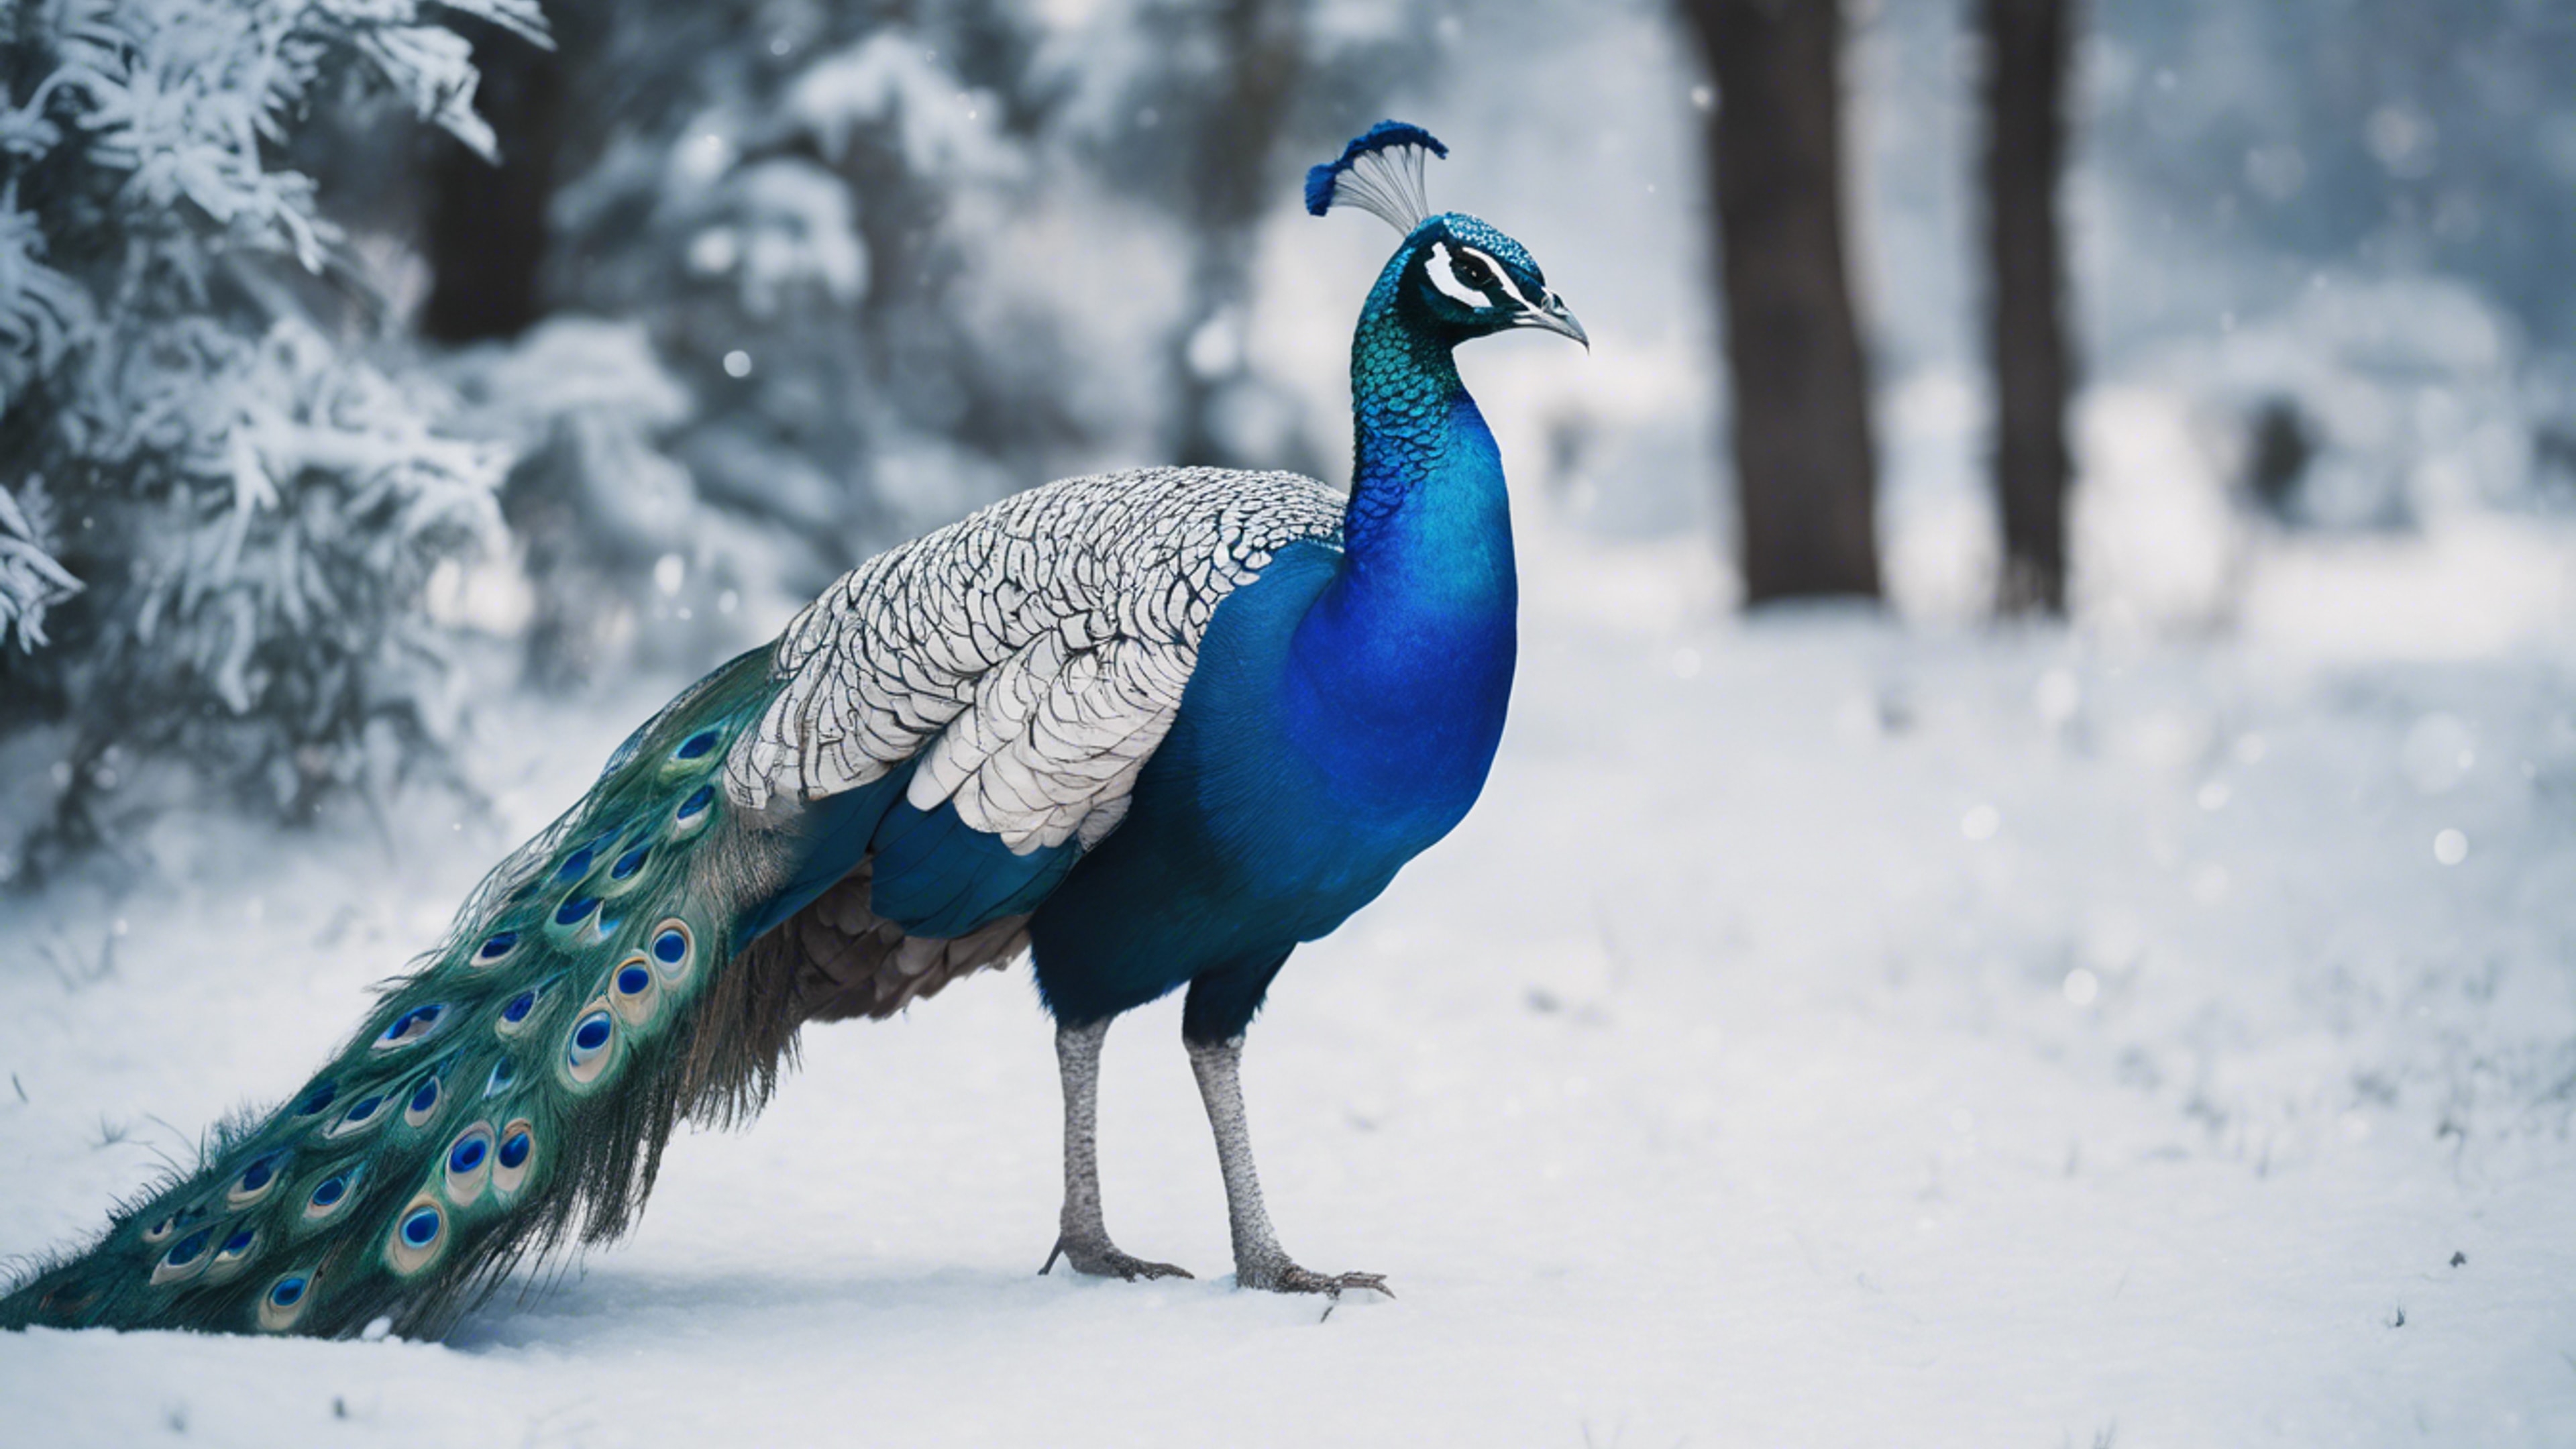 An azure blue peacock with a stunning white crest roaming in a winter wonderland. Tapeta[75d8e926bbf547baa433]